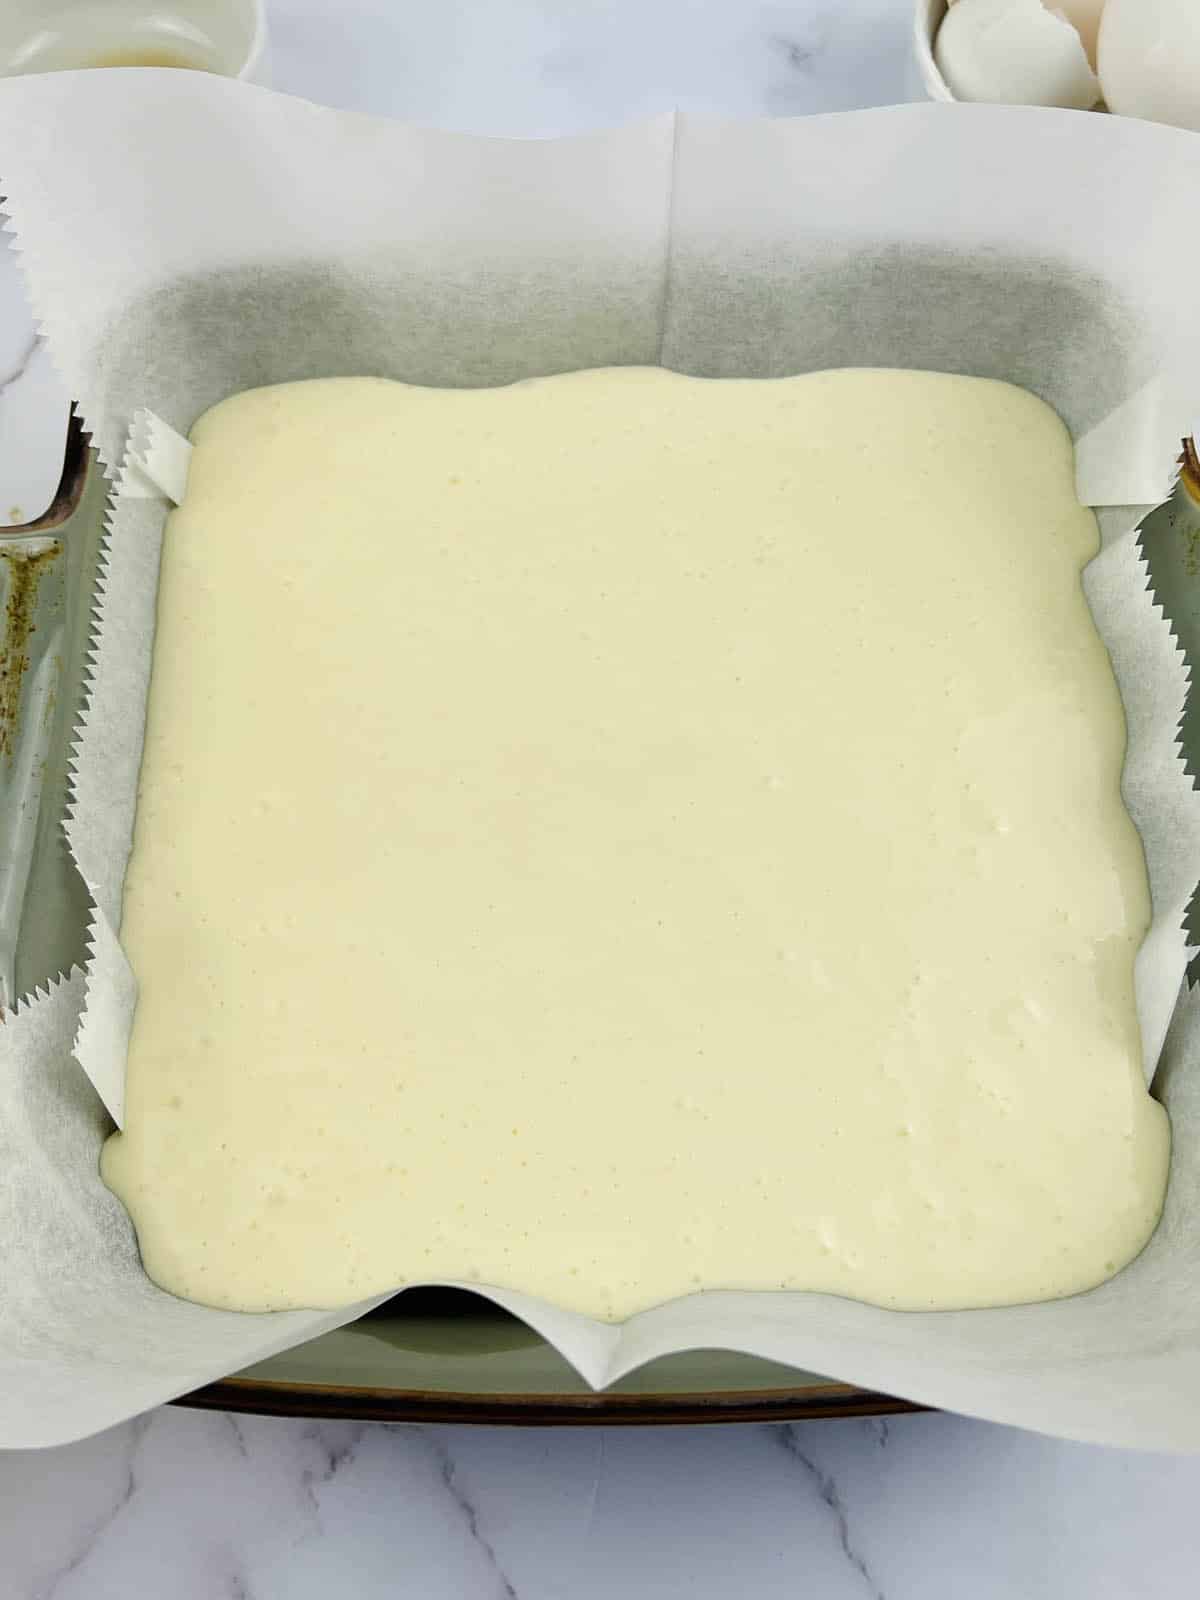 Cream cheese mixture in pan.